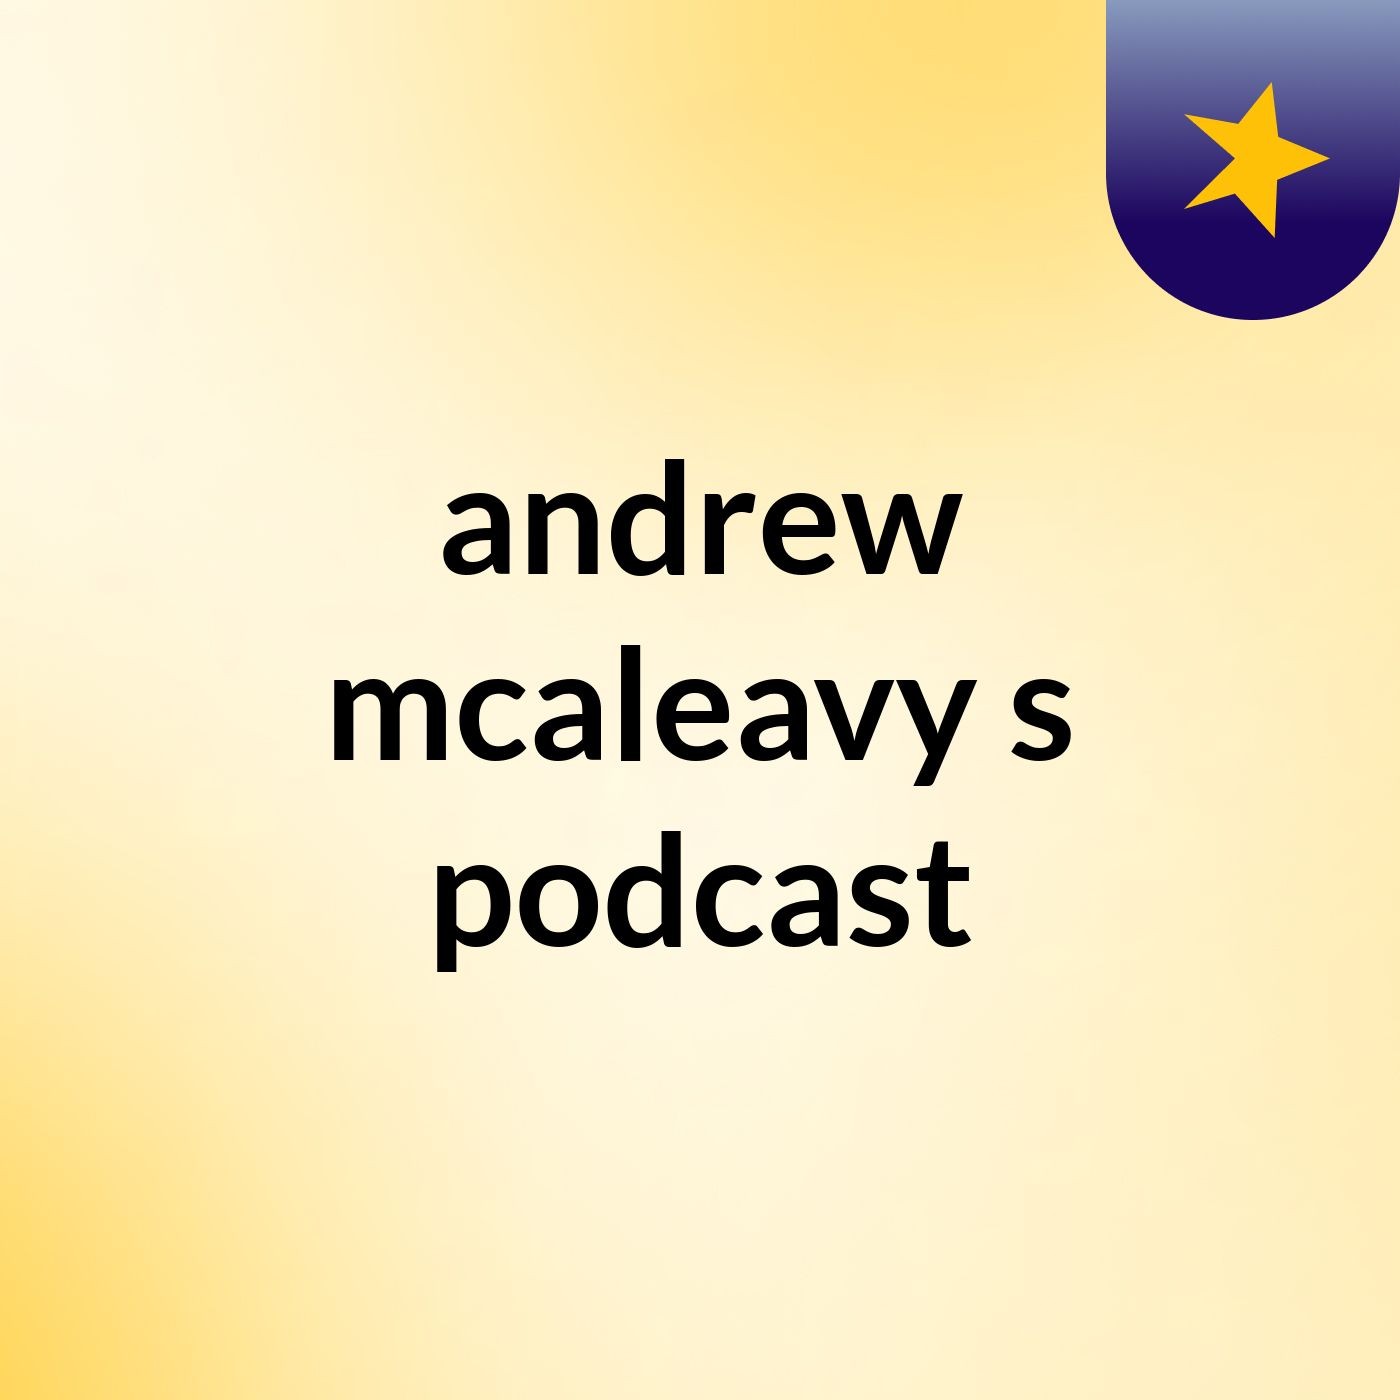 Episode 3 - andrew mcaleavy's podcast